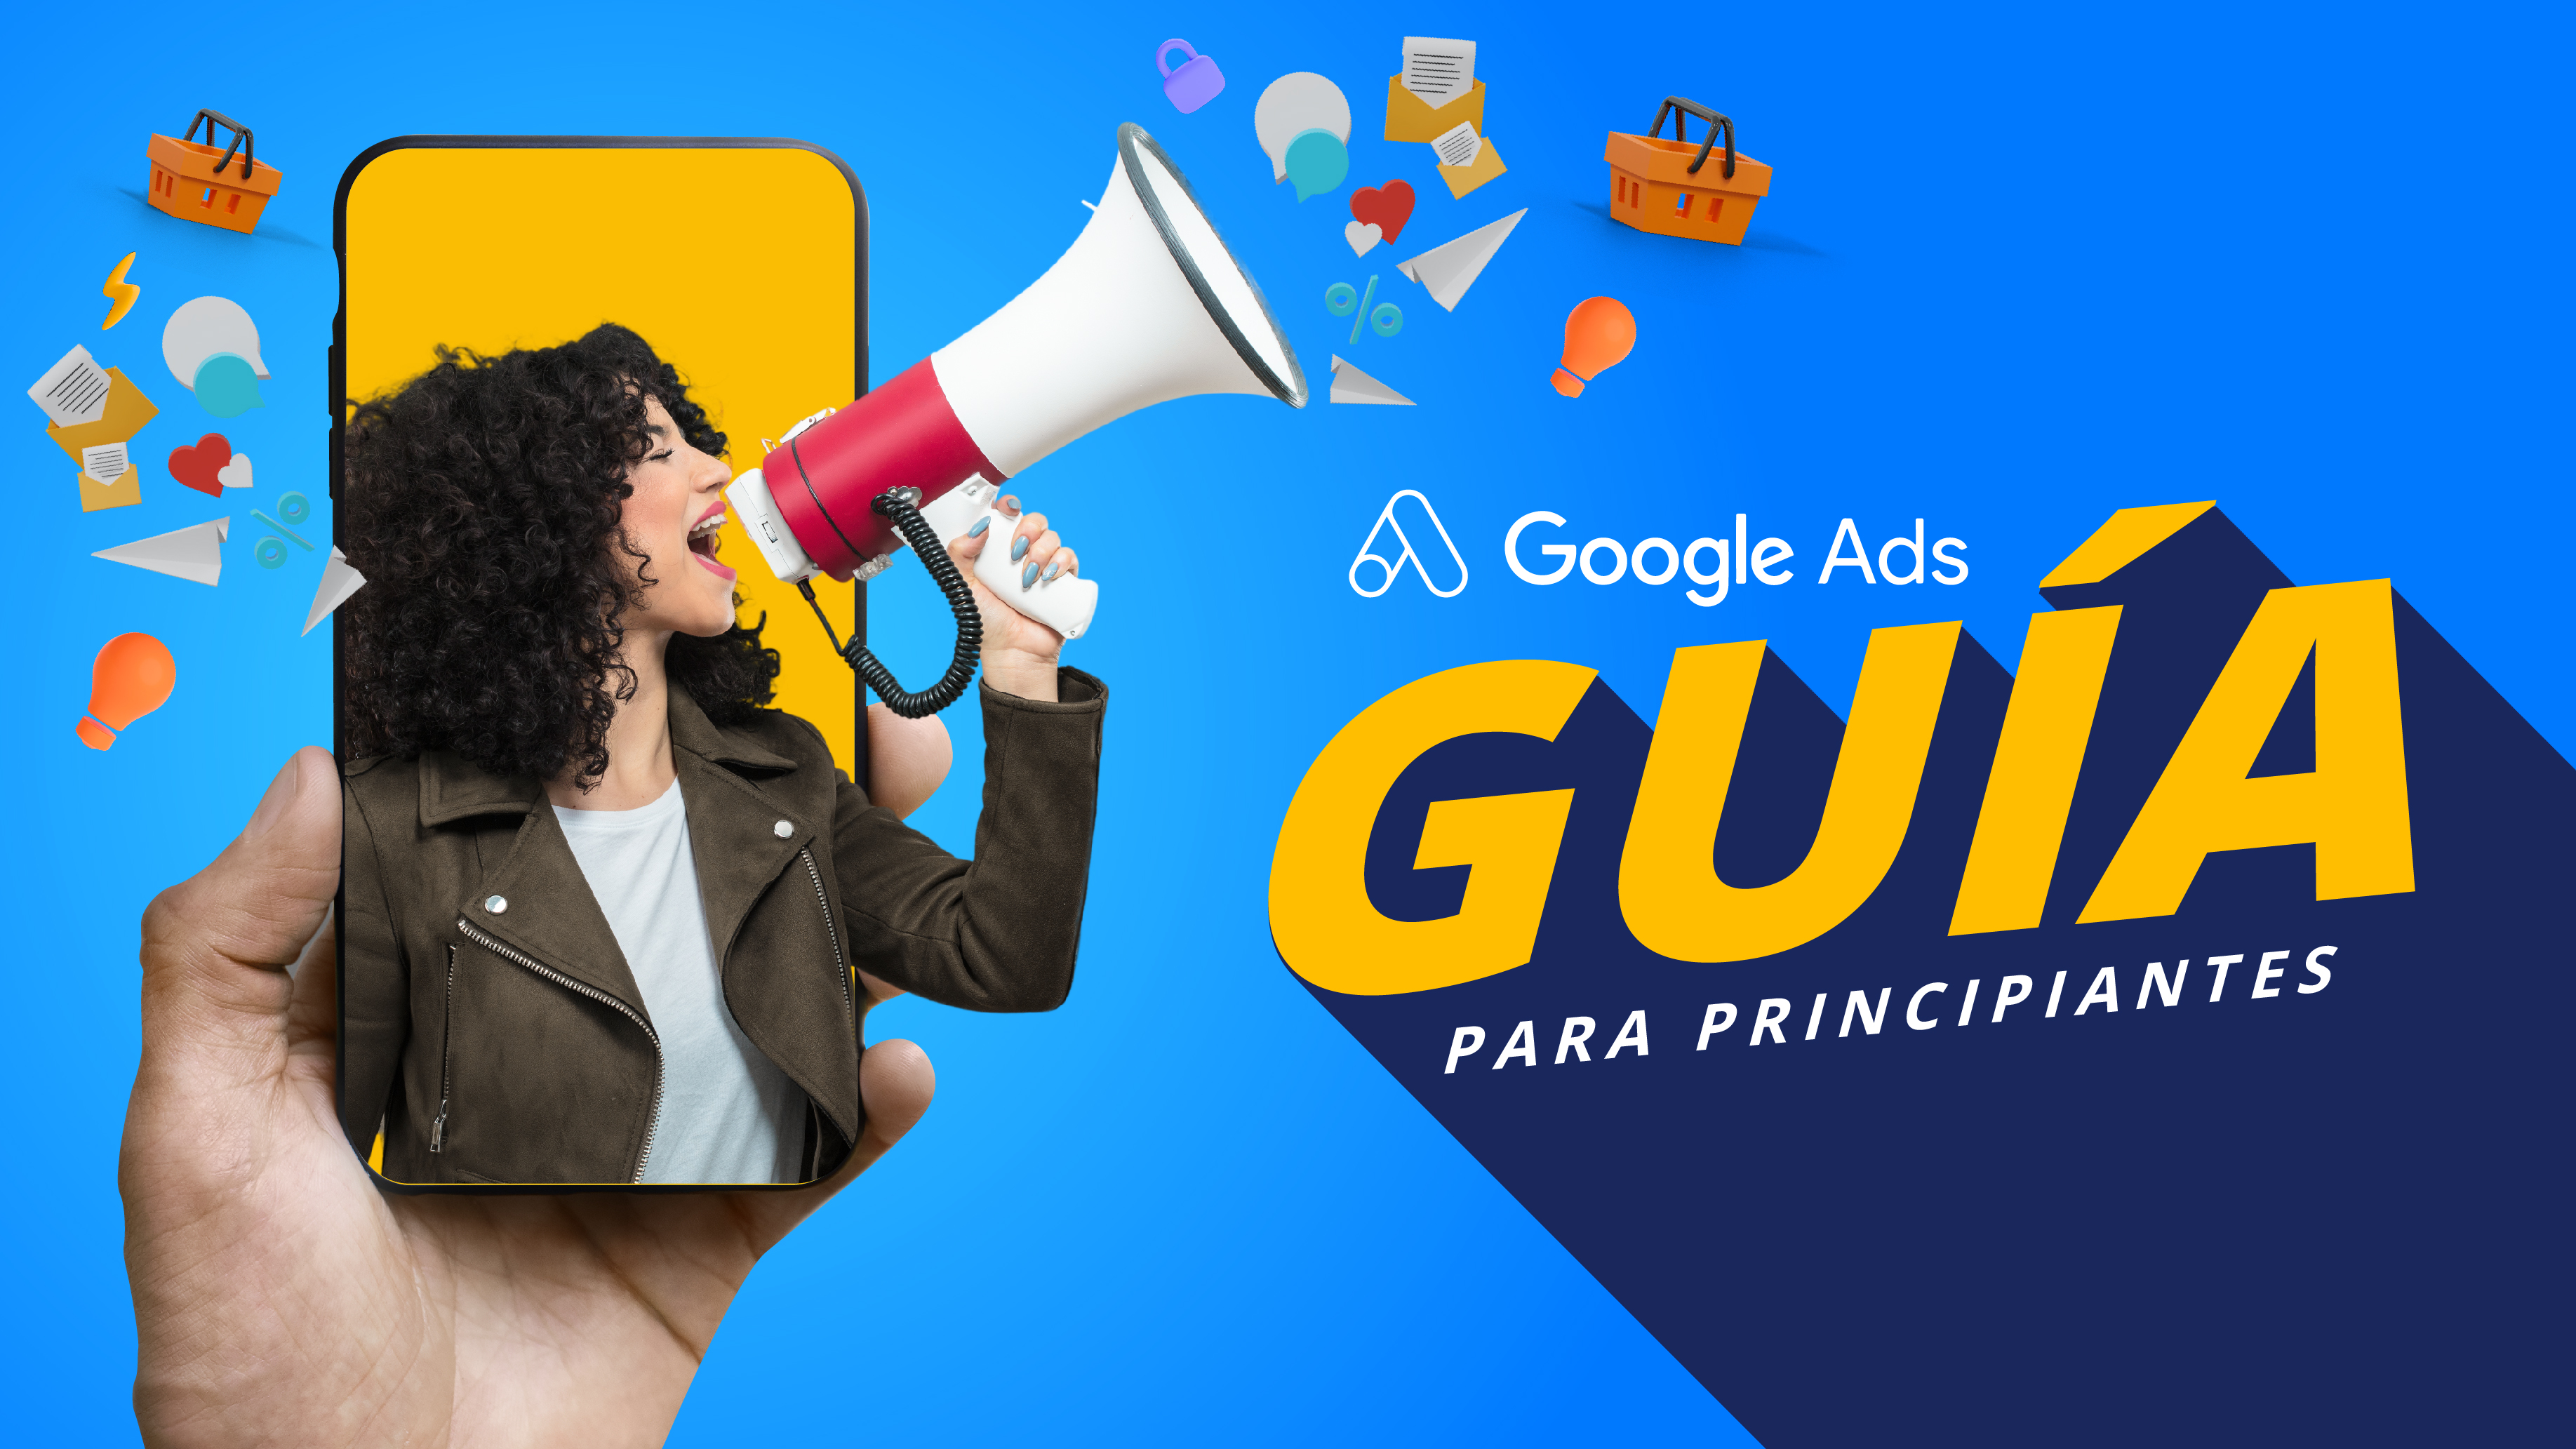 ¡Aprende Google Ads desde 0! (Guía práctica)